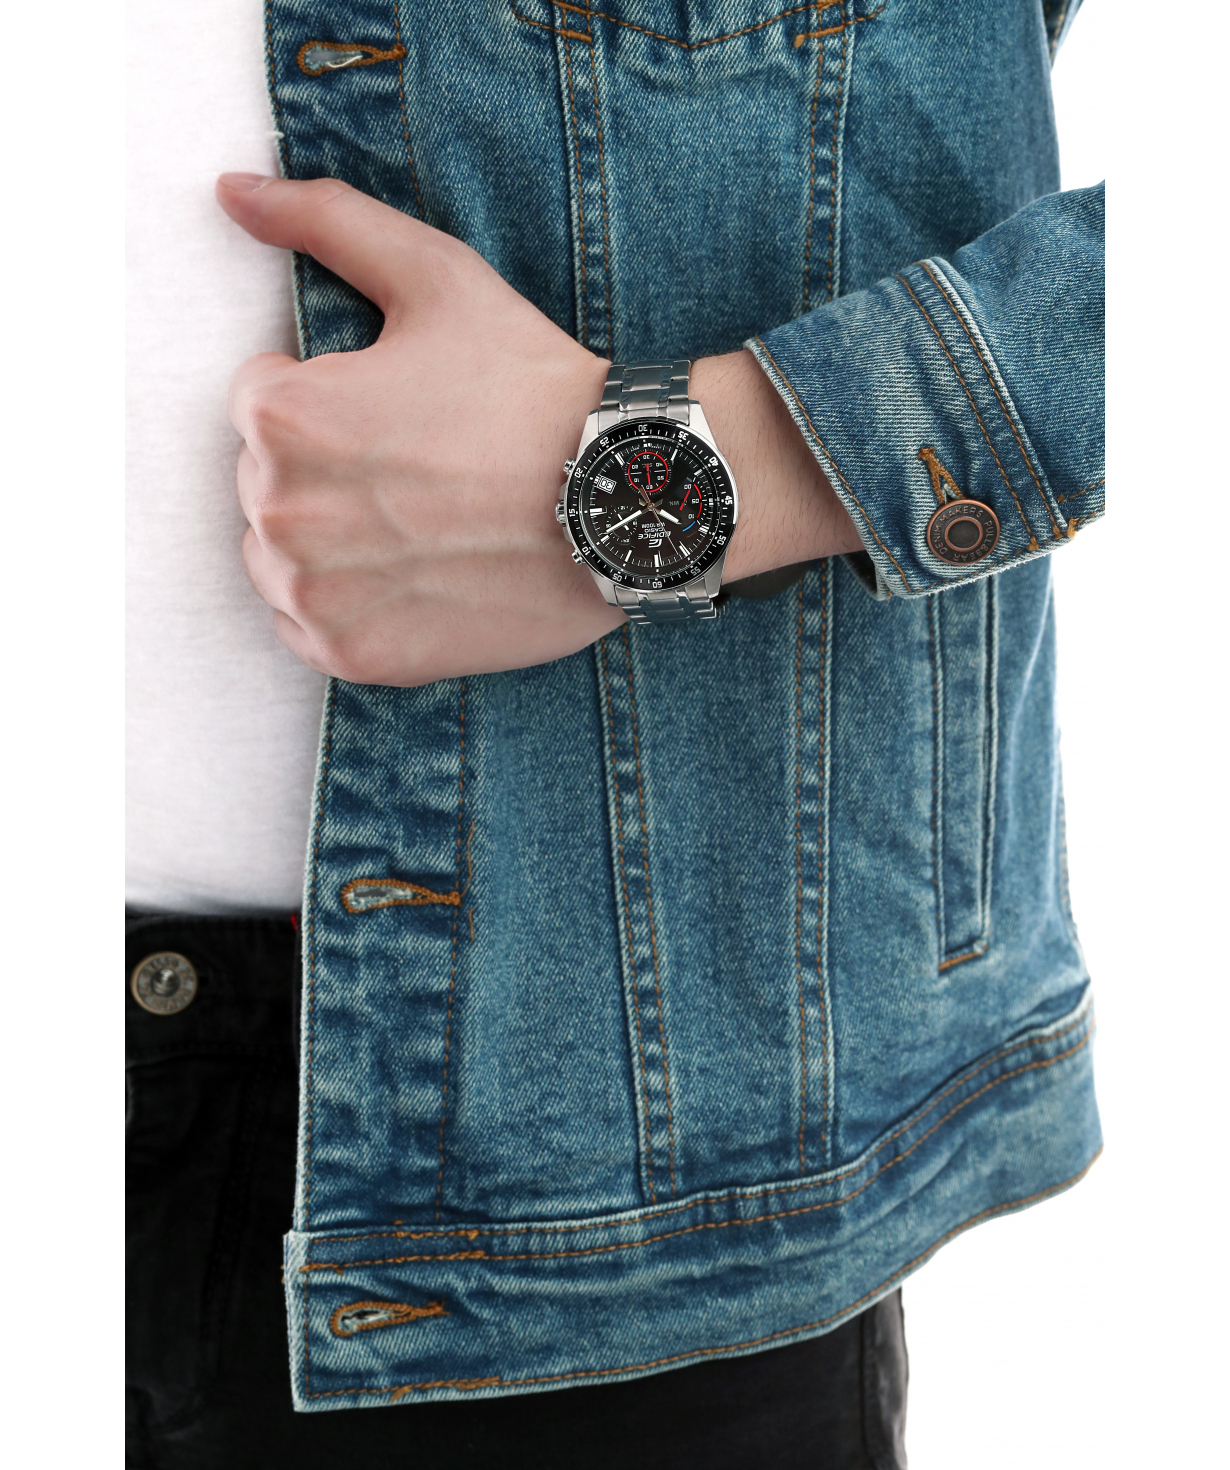 Ժամացույց  «Casio» ձեռքի  EFV-540D-1AVUDF